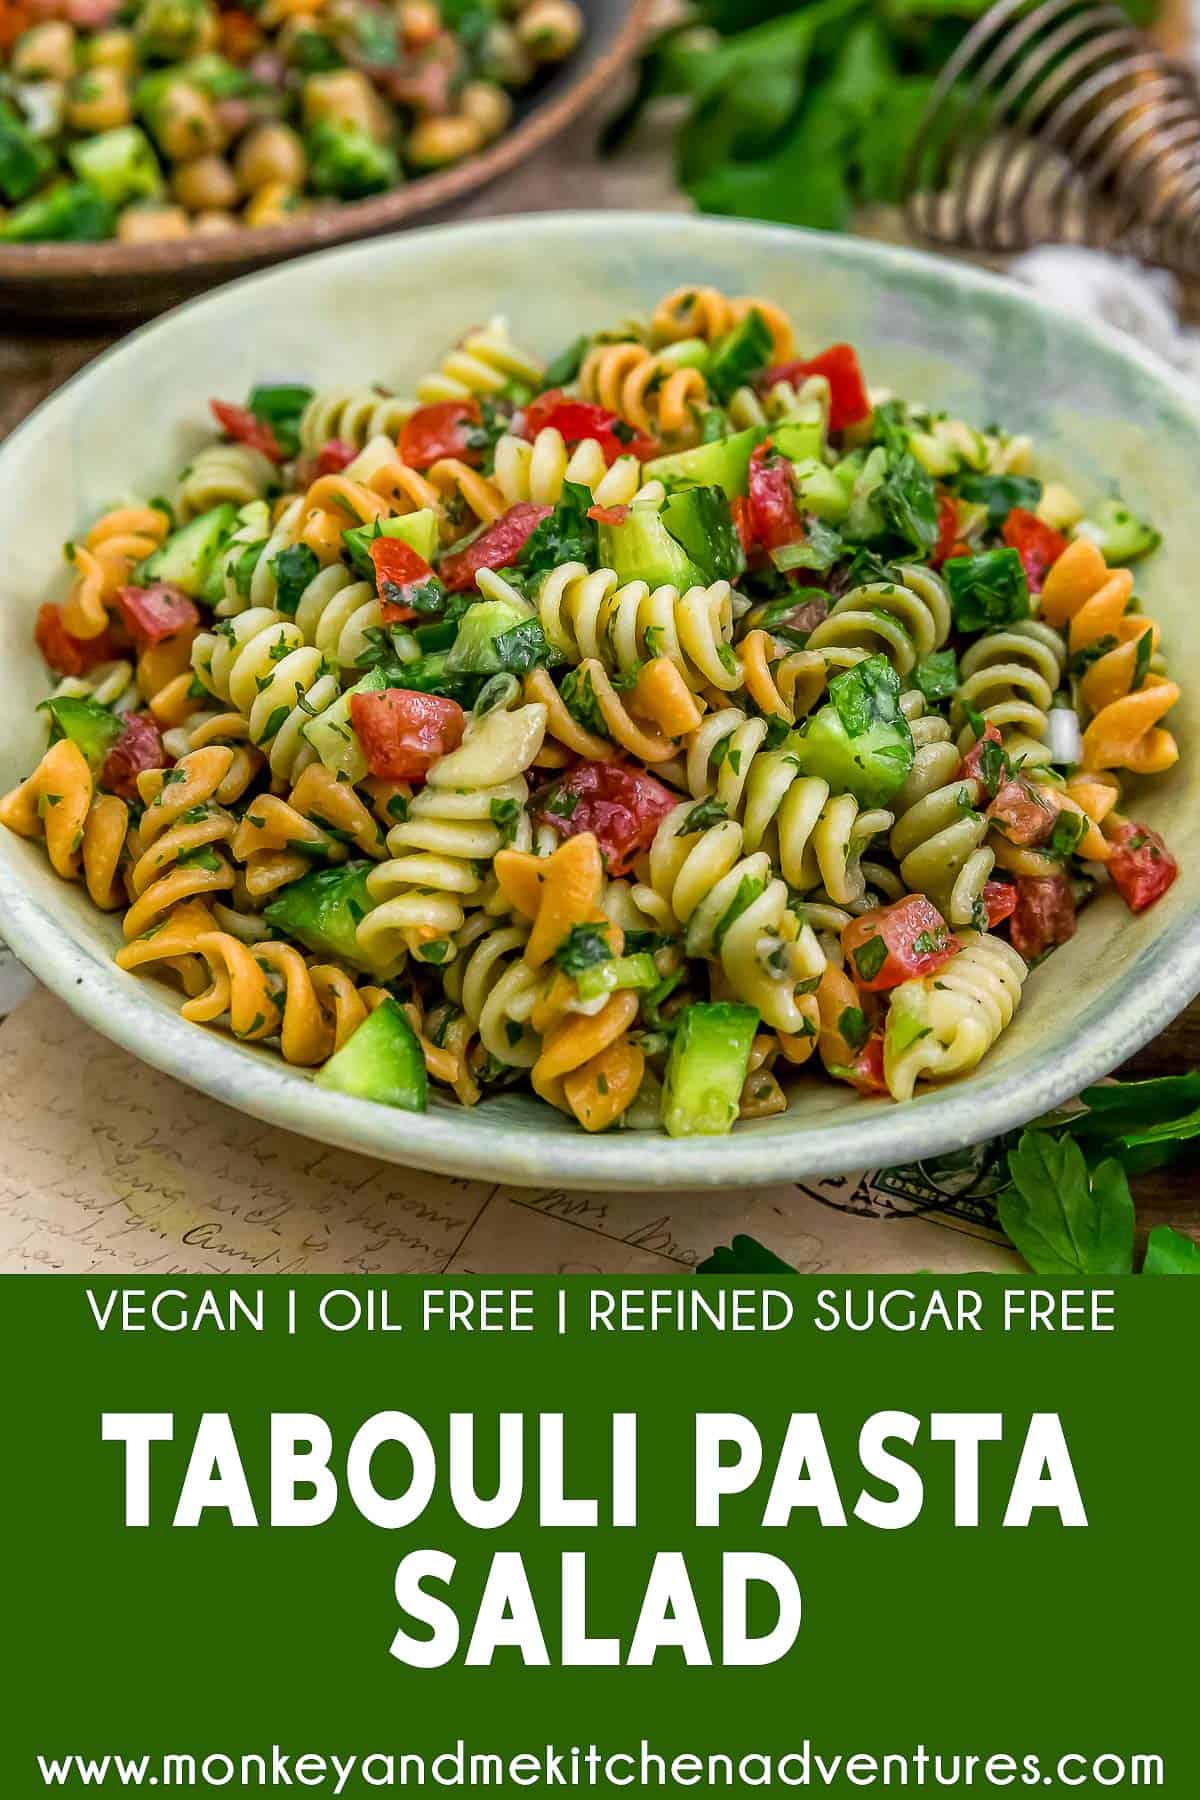 Oil Free Tabouli Pasta Salad with text description